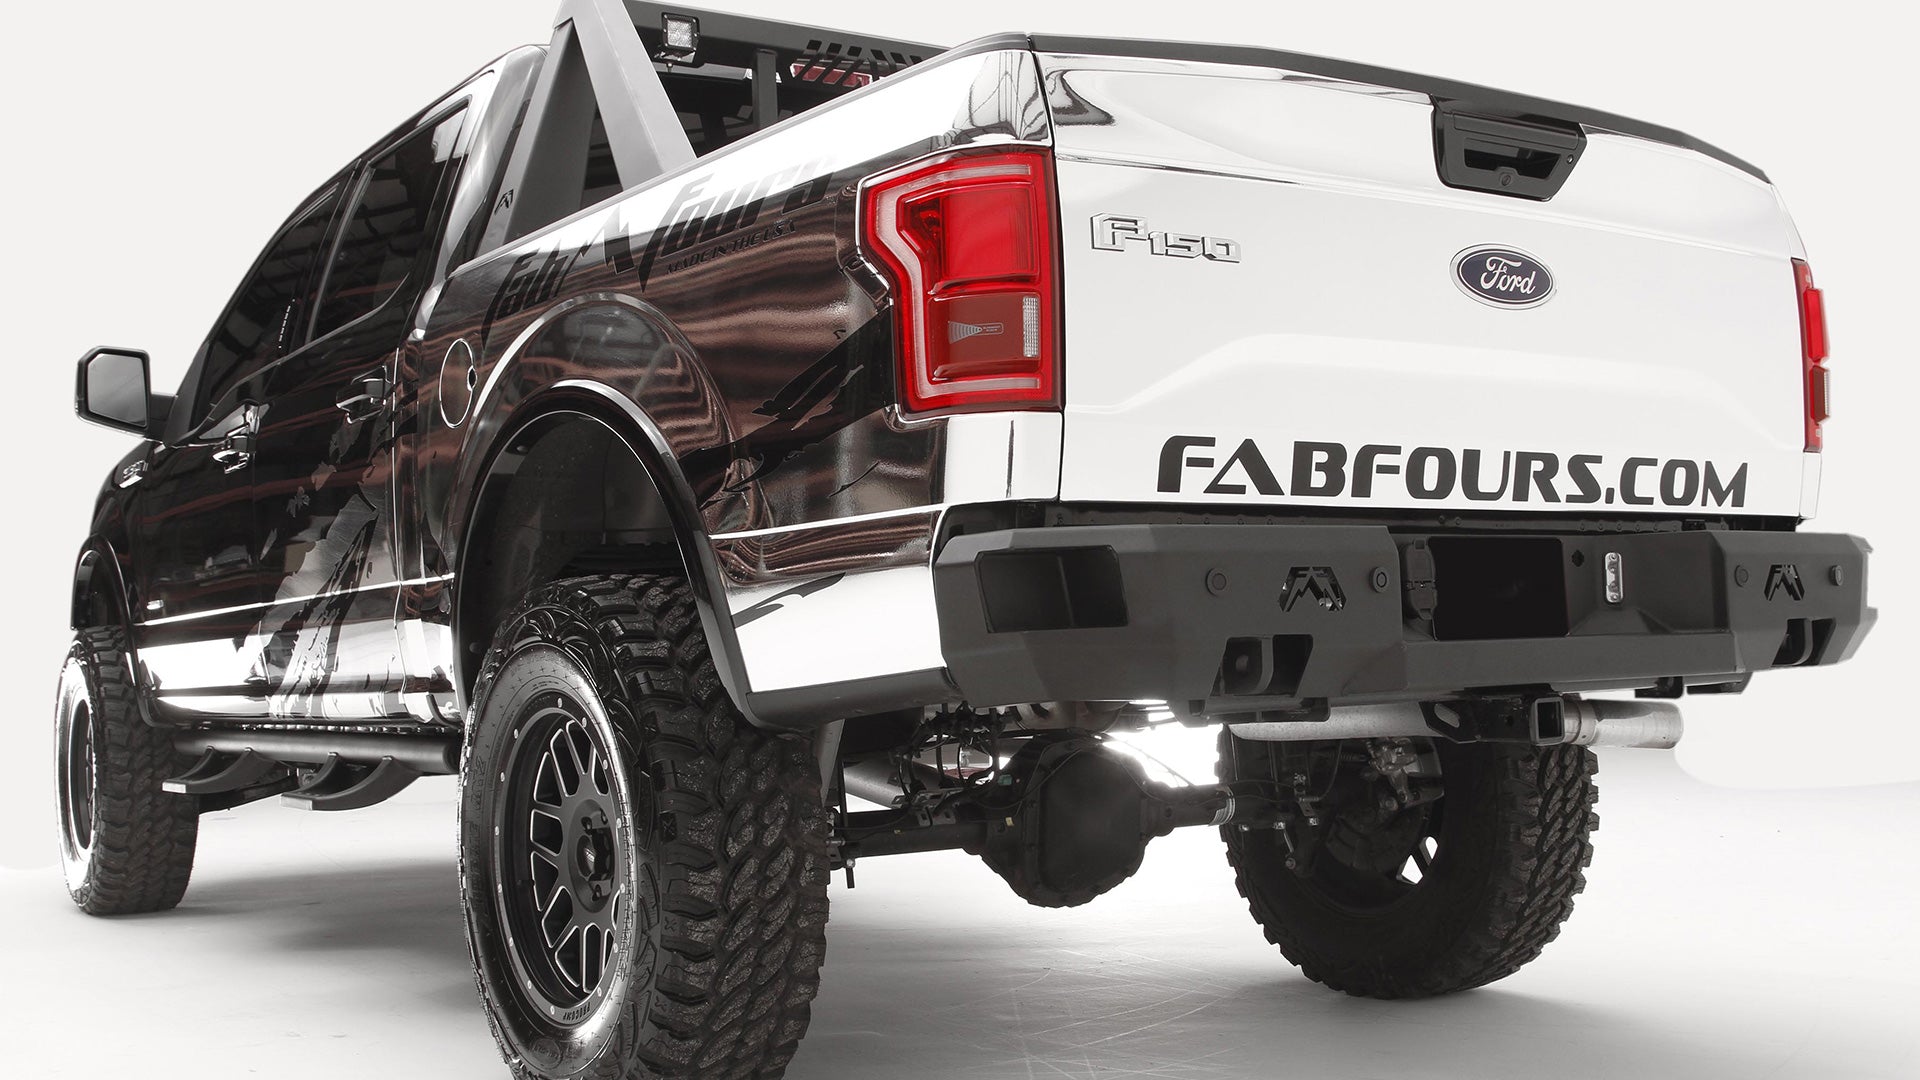 Fab Fours Premium Rear Bumper Ford F150 2015-2020 - Mid-Atlantic Off-Roading